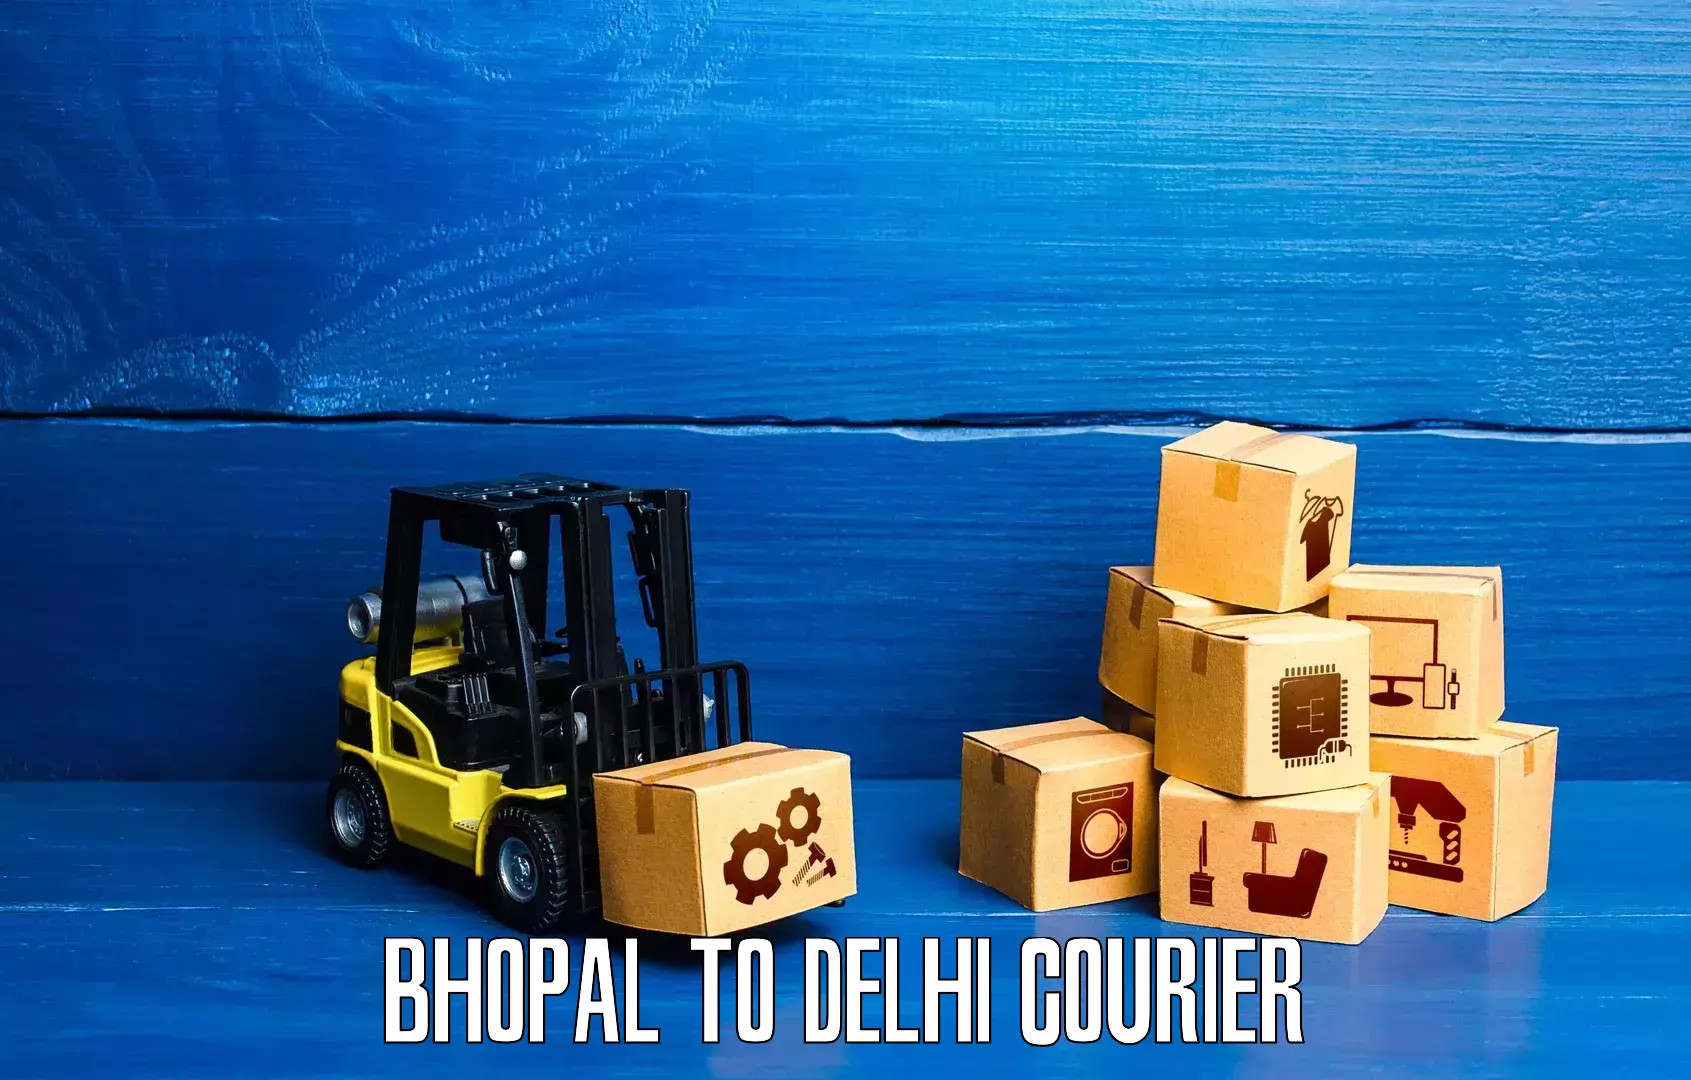 Multi-city courier Bhopal to Delhi